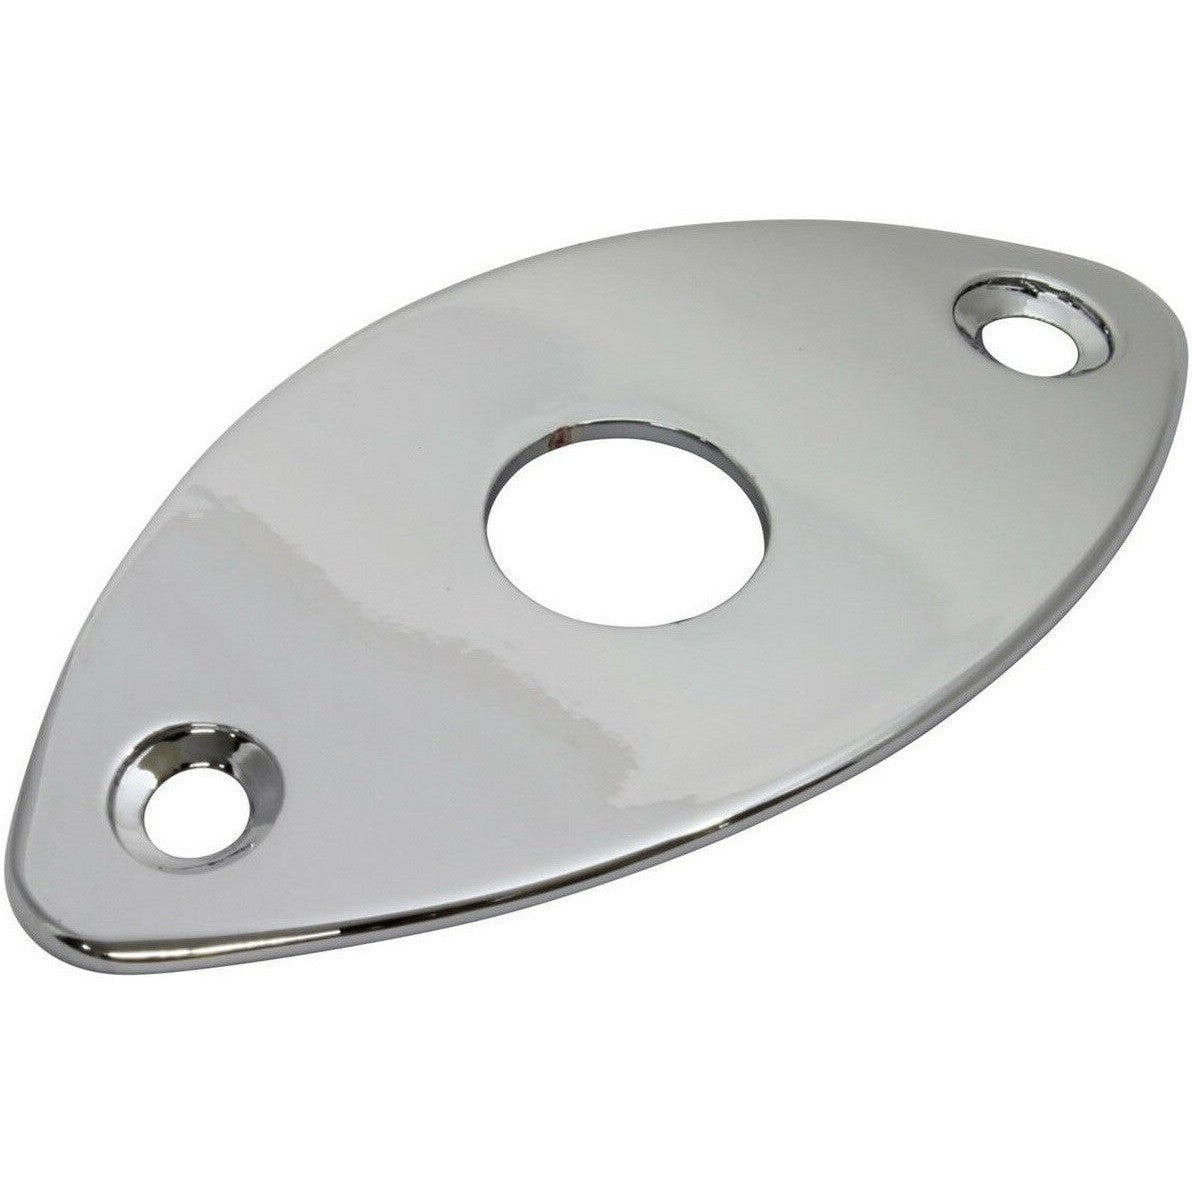 Jack Plate Oval Style Curved Chrome